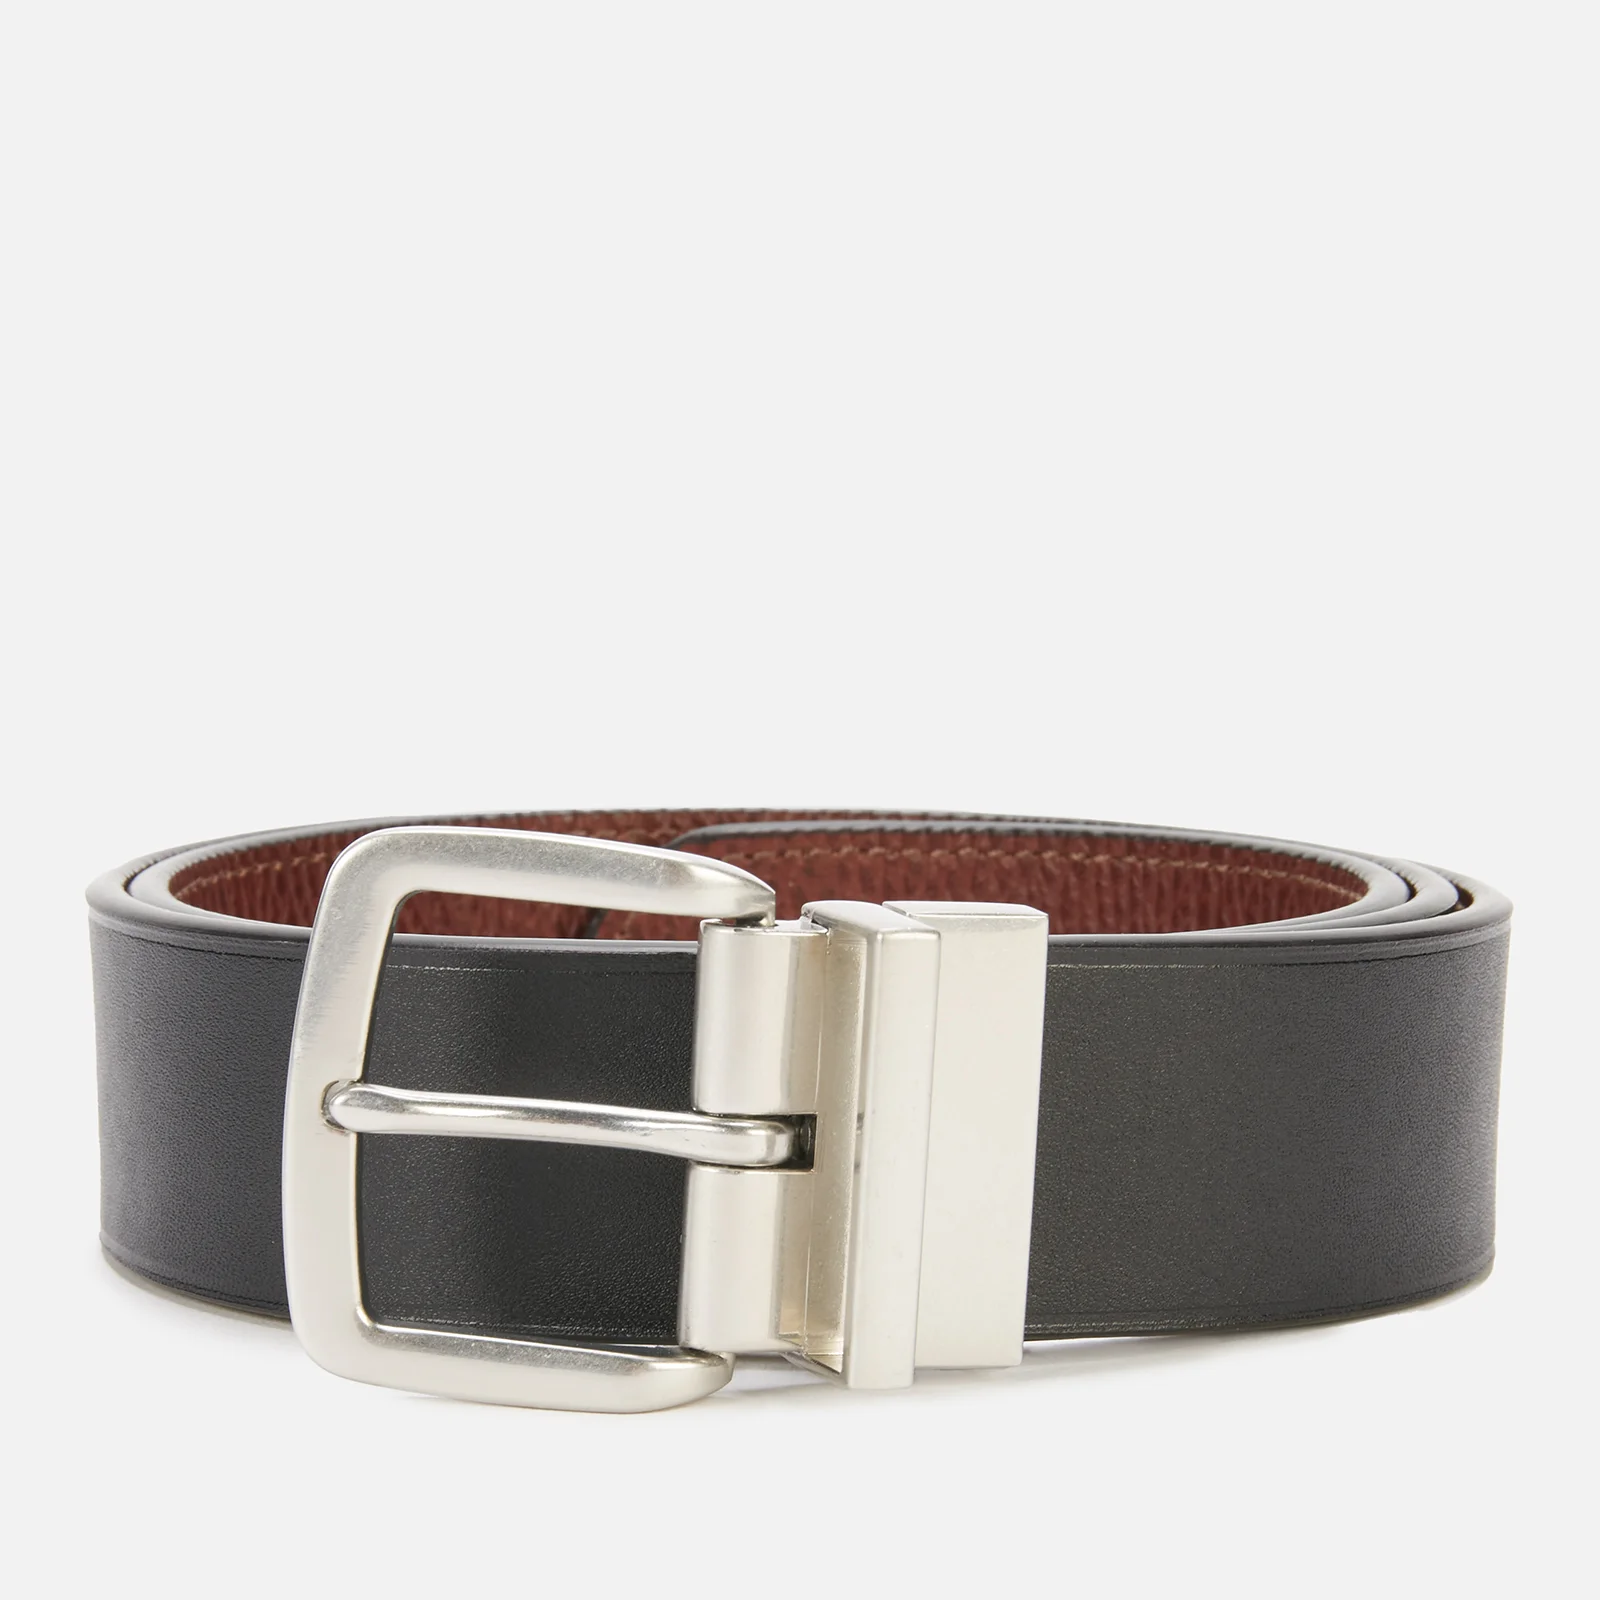 Polo Ralph Lauren Men's Reversible Harness Leather Dress Belt - Brown/Black Image 1